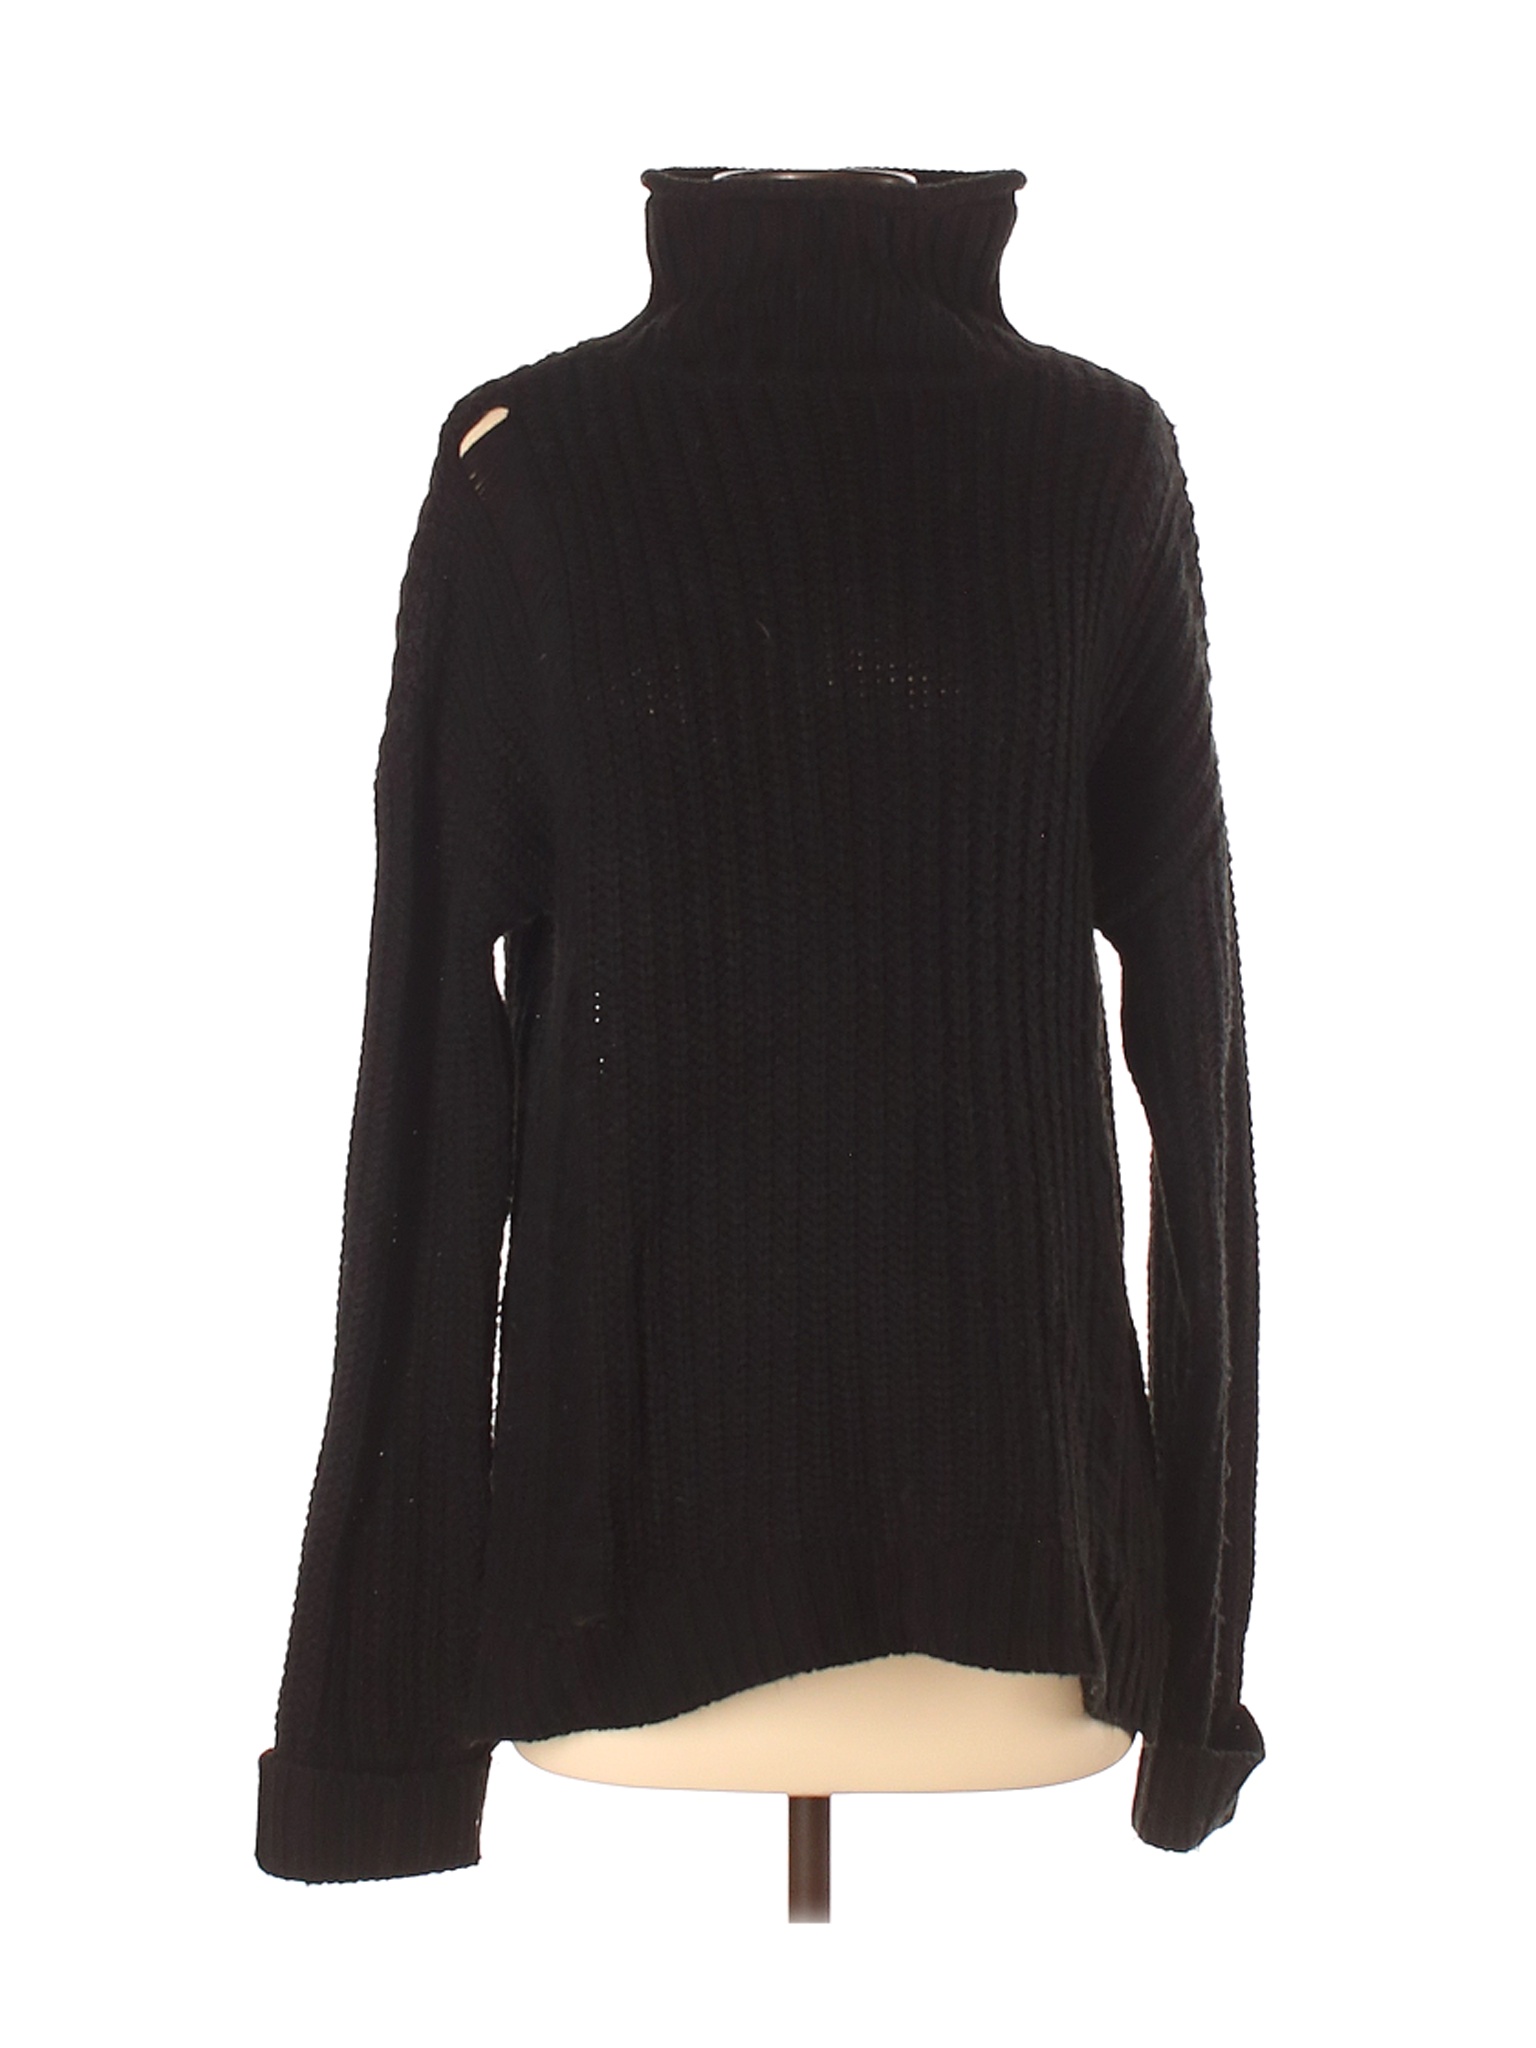 Supplies Women Black Pullover Sweater S | eBay